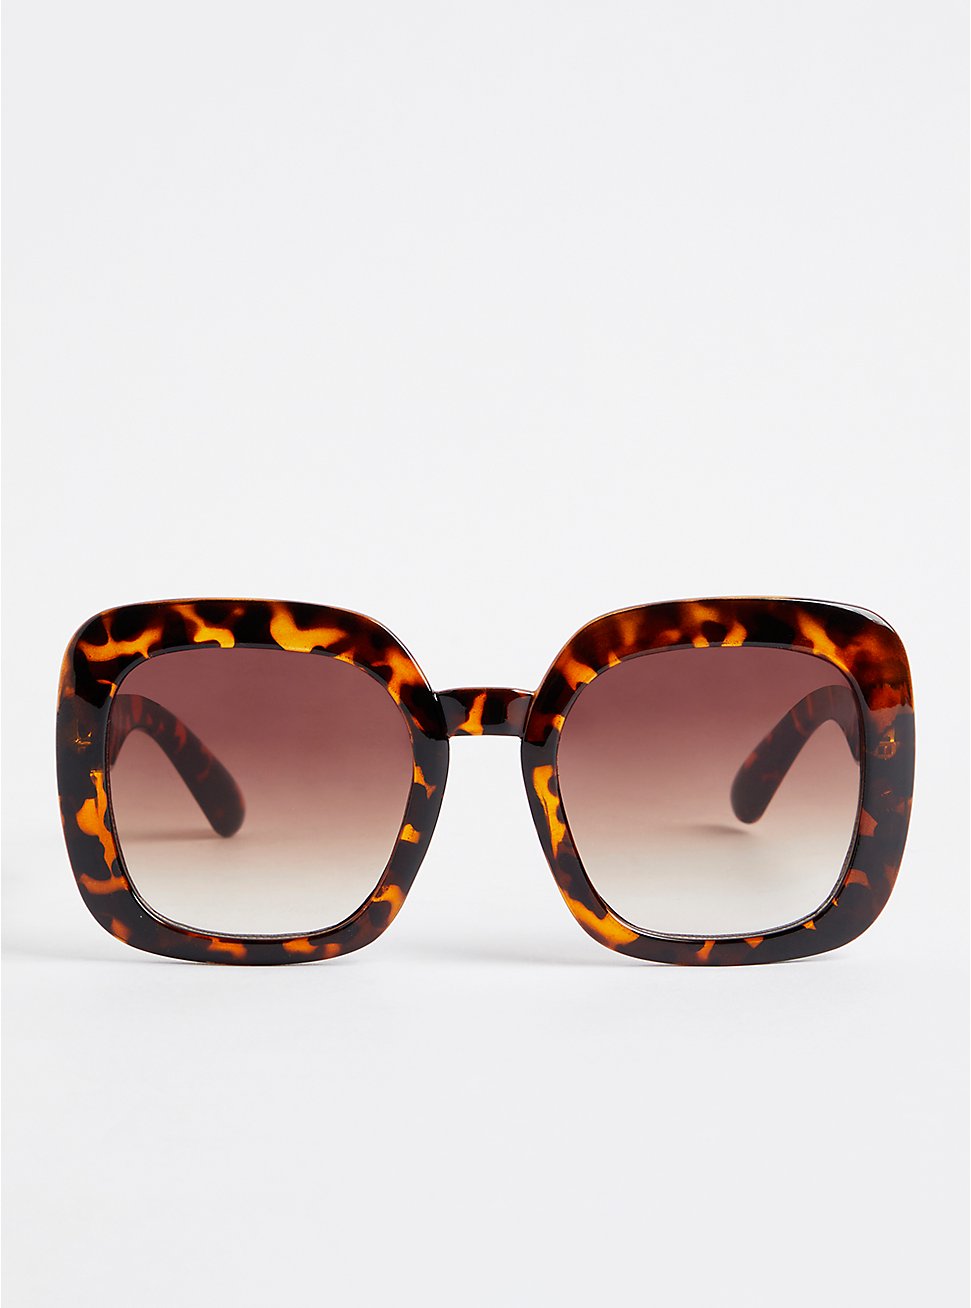 Plus Size Tortoise Shell Square Oversized Sunglasses - Brown , , hi-res